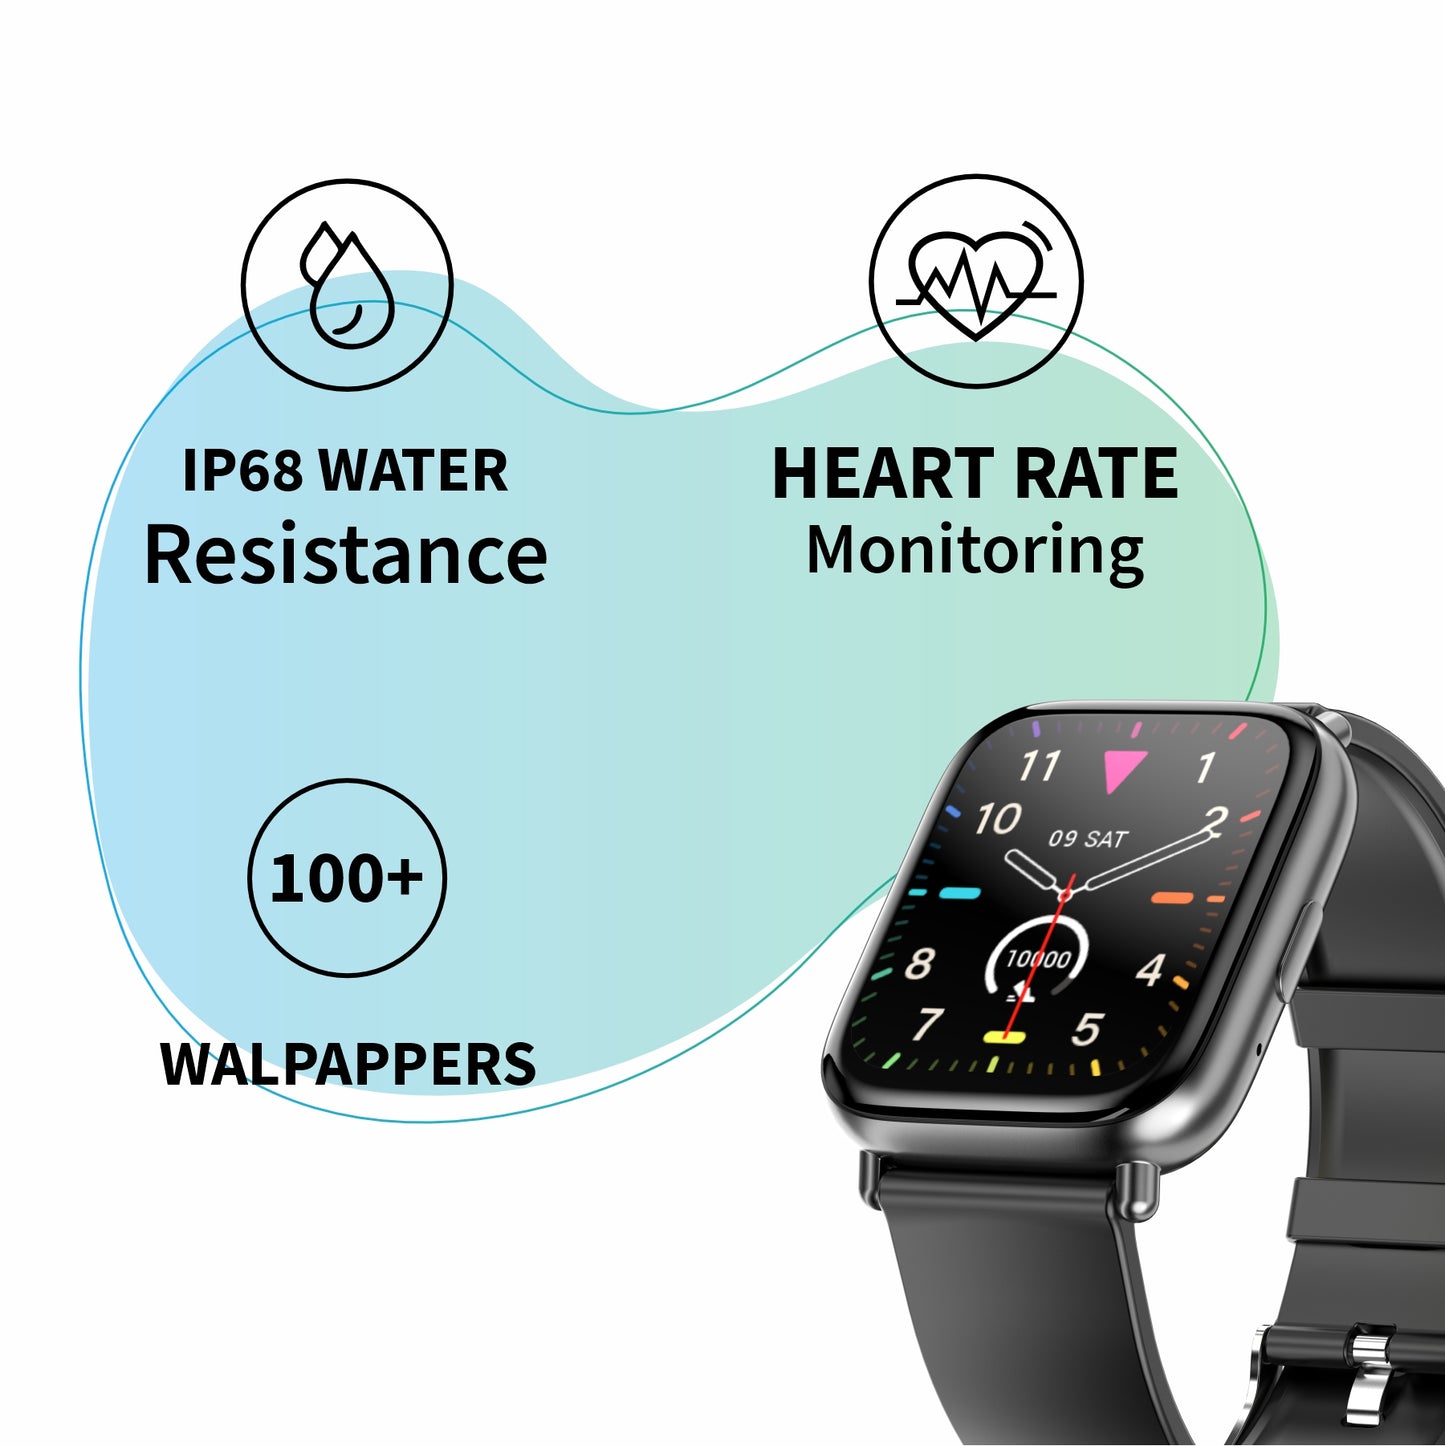 LYNE Lancer 5 Smart Watch 1.69" HD Screen, Bluetooth Calling & IP68 Water Resistance